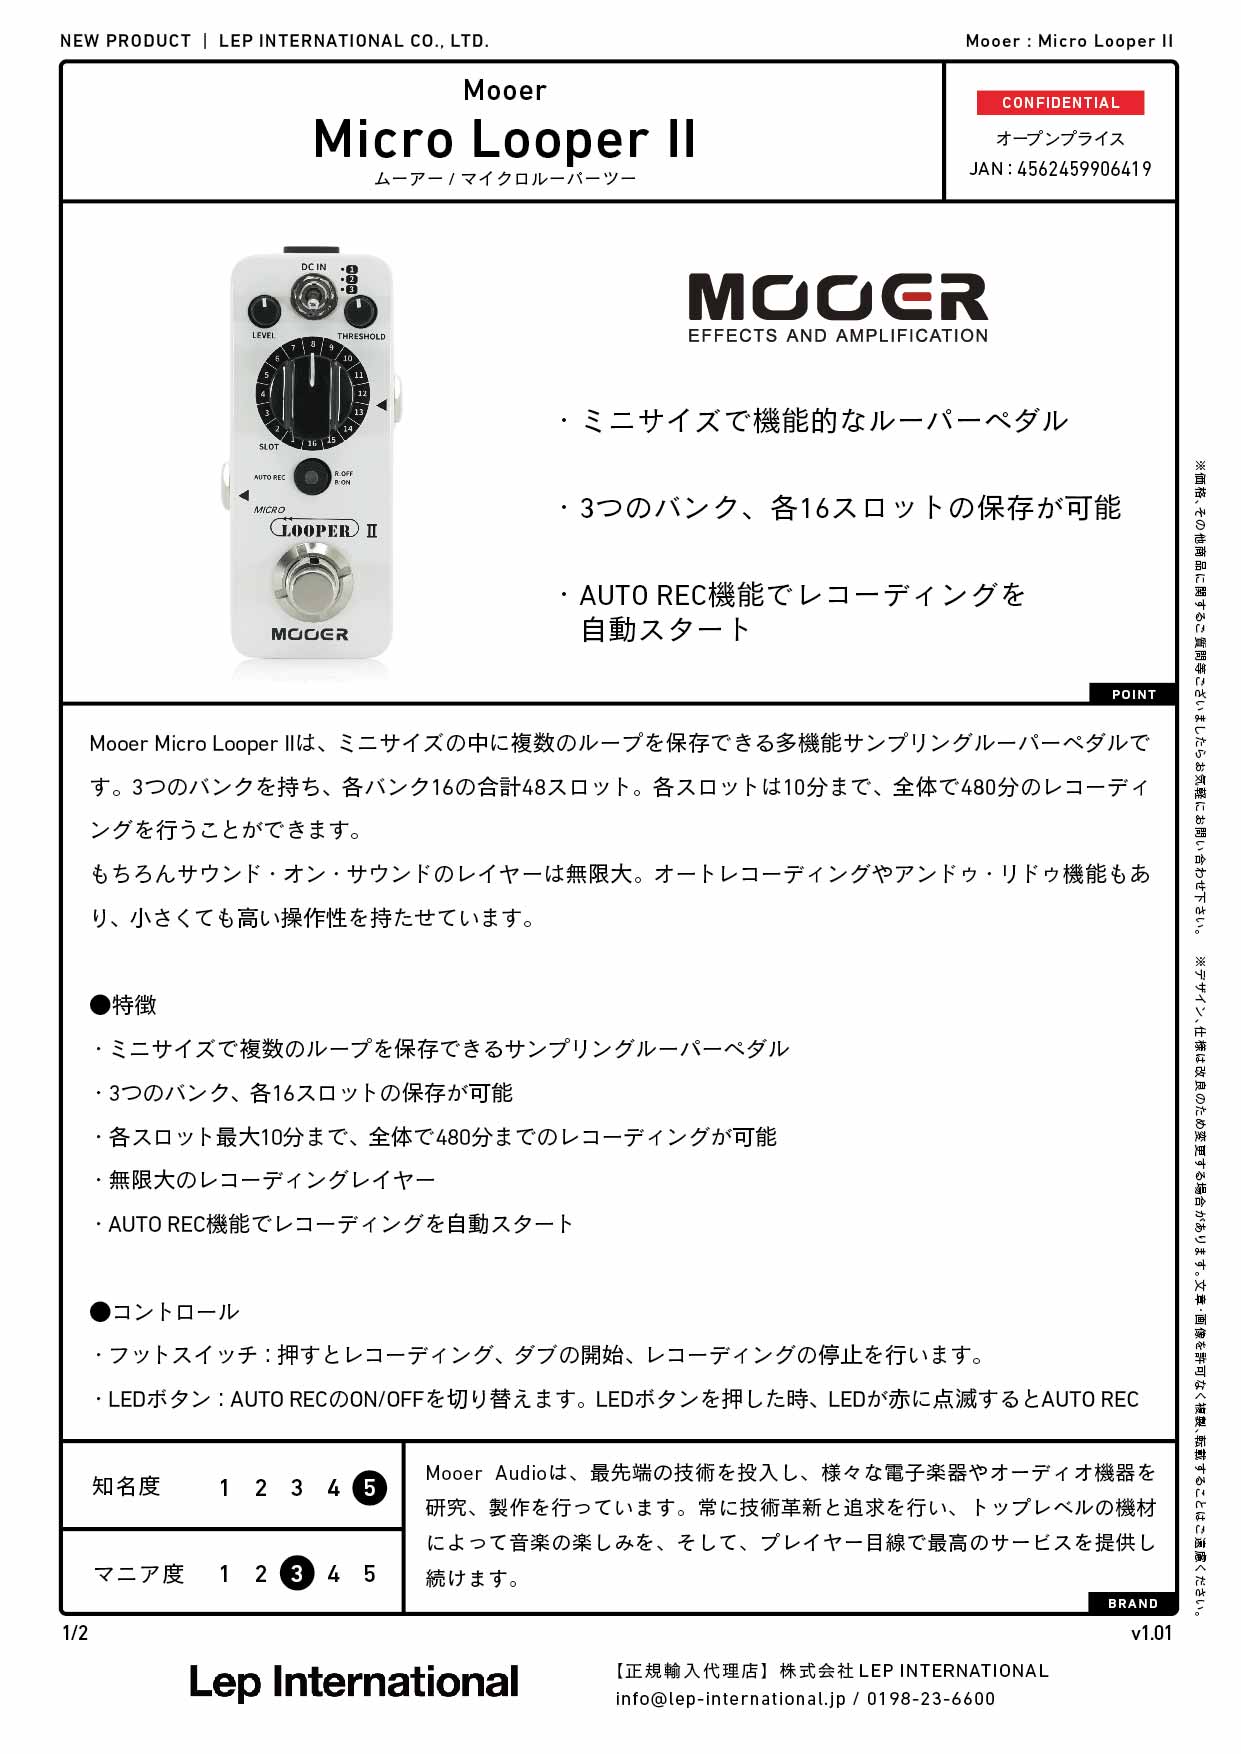 Micro LOOPER II_MOOER Audio